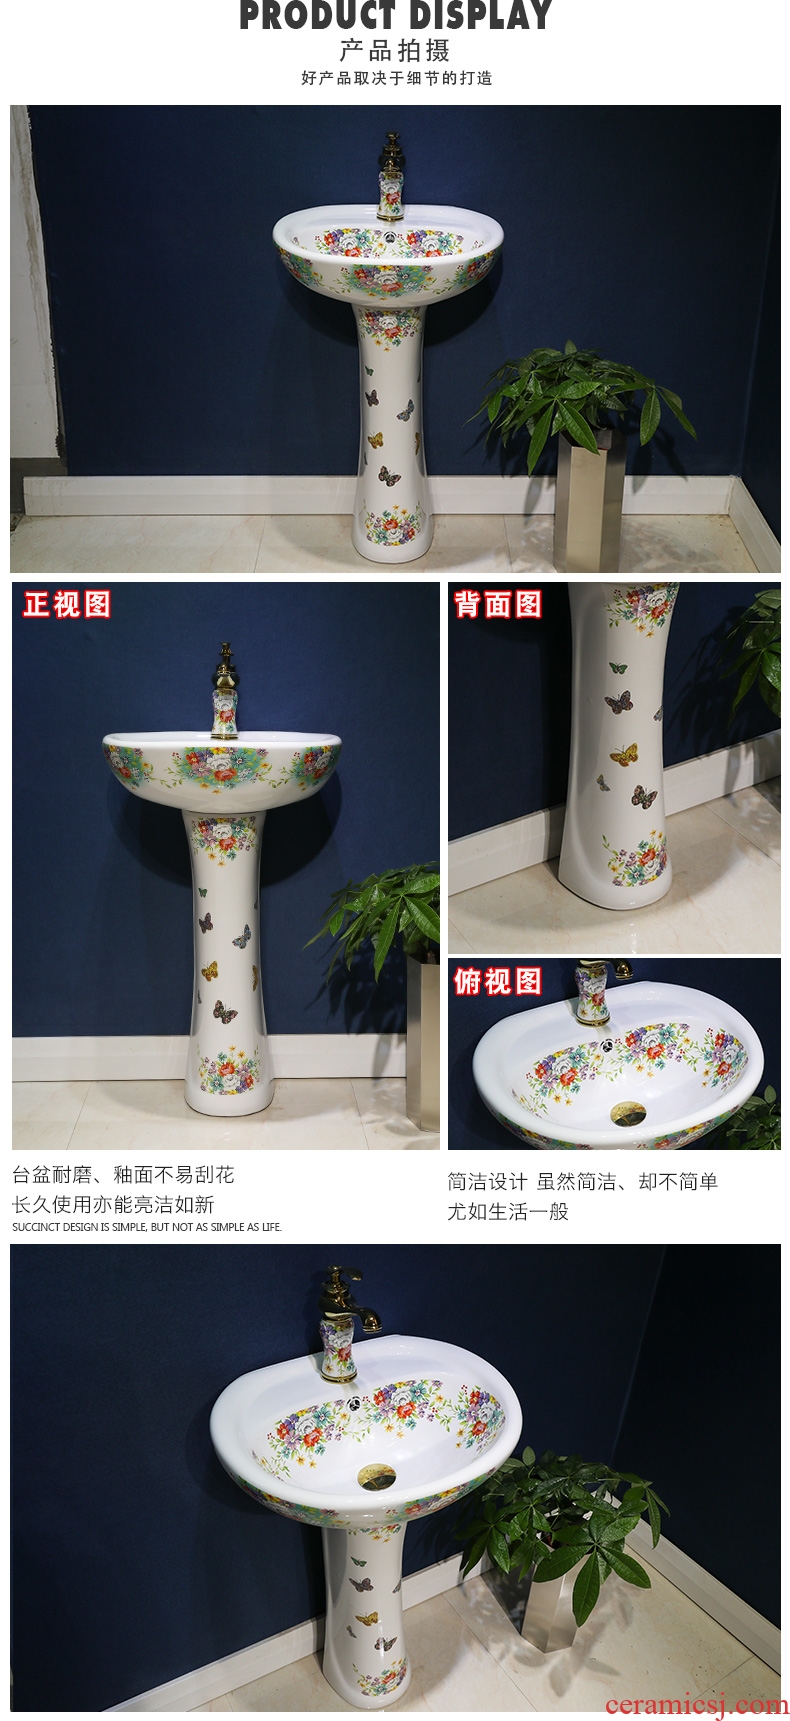 M the pillar of European art basin ceramic floor pillar lavabo basin one pillar type lavatory